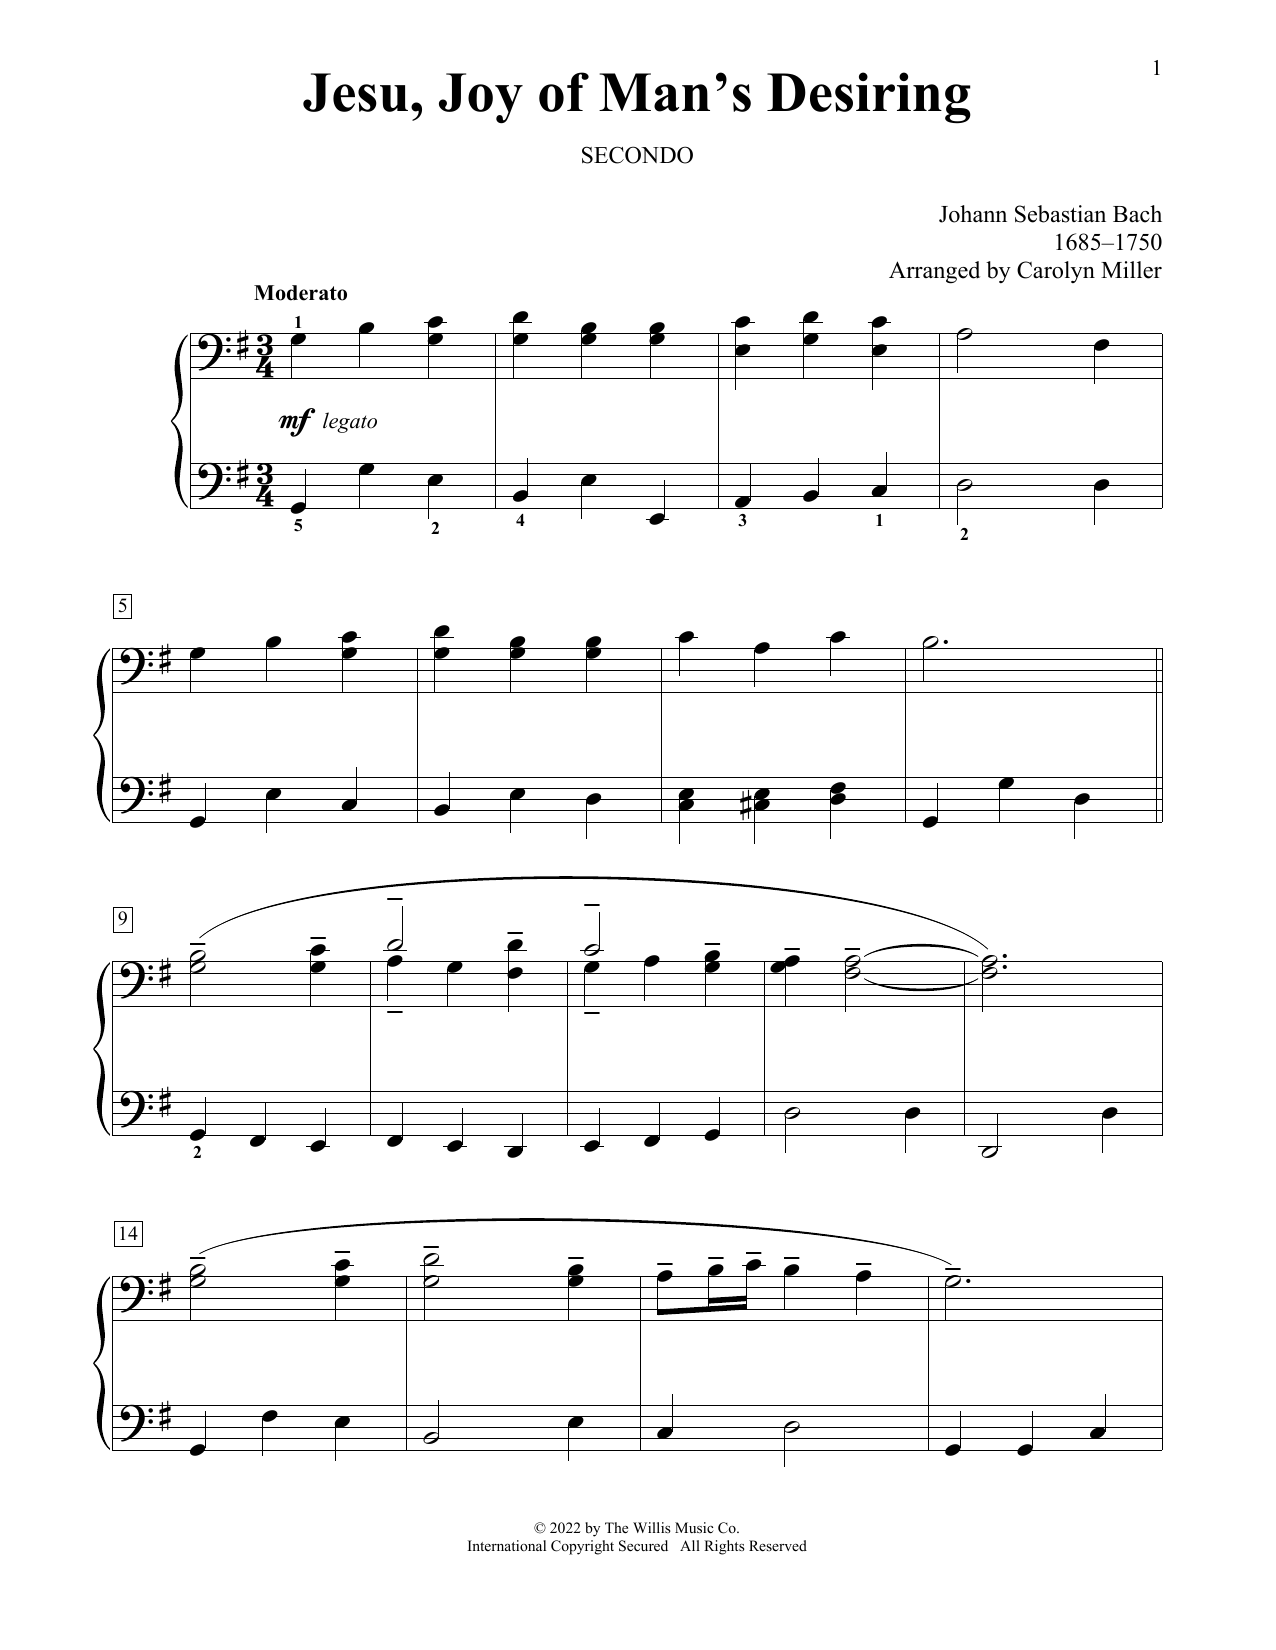 Download Johann Sebastian Bach Jesu, Joy Of Man's Desiring (arr. Carolyn Miller) Sheet Music and learn how to play Piano Duet PDF digital score in minutes